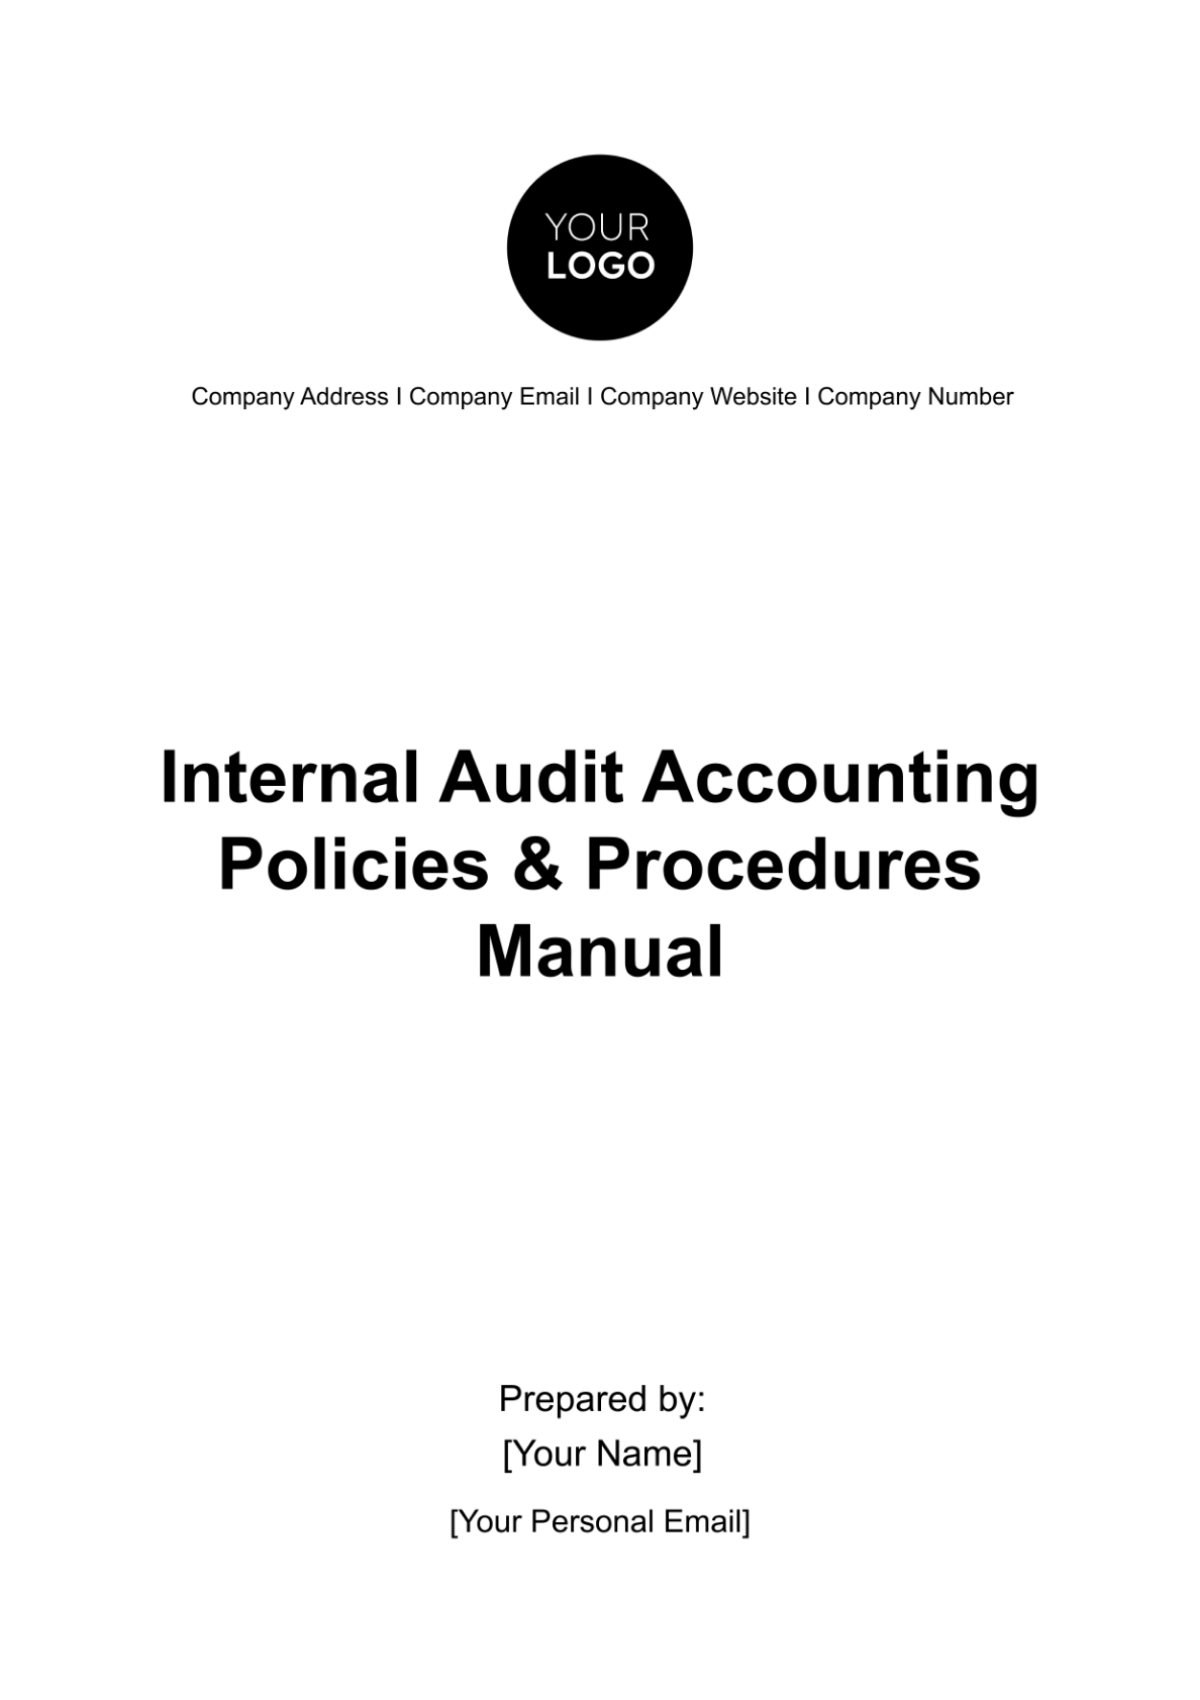 Internal Audit Accounting Policies & Procedures Manual Template